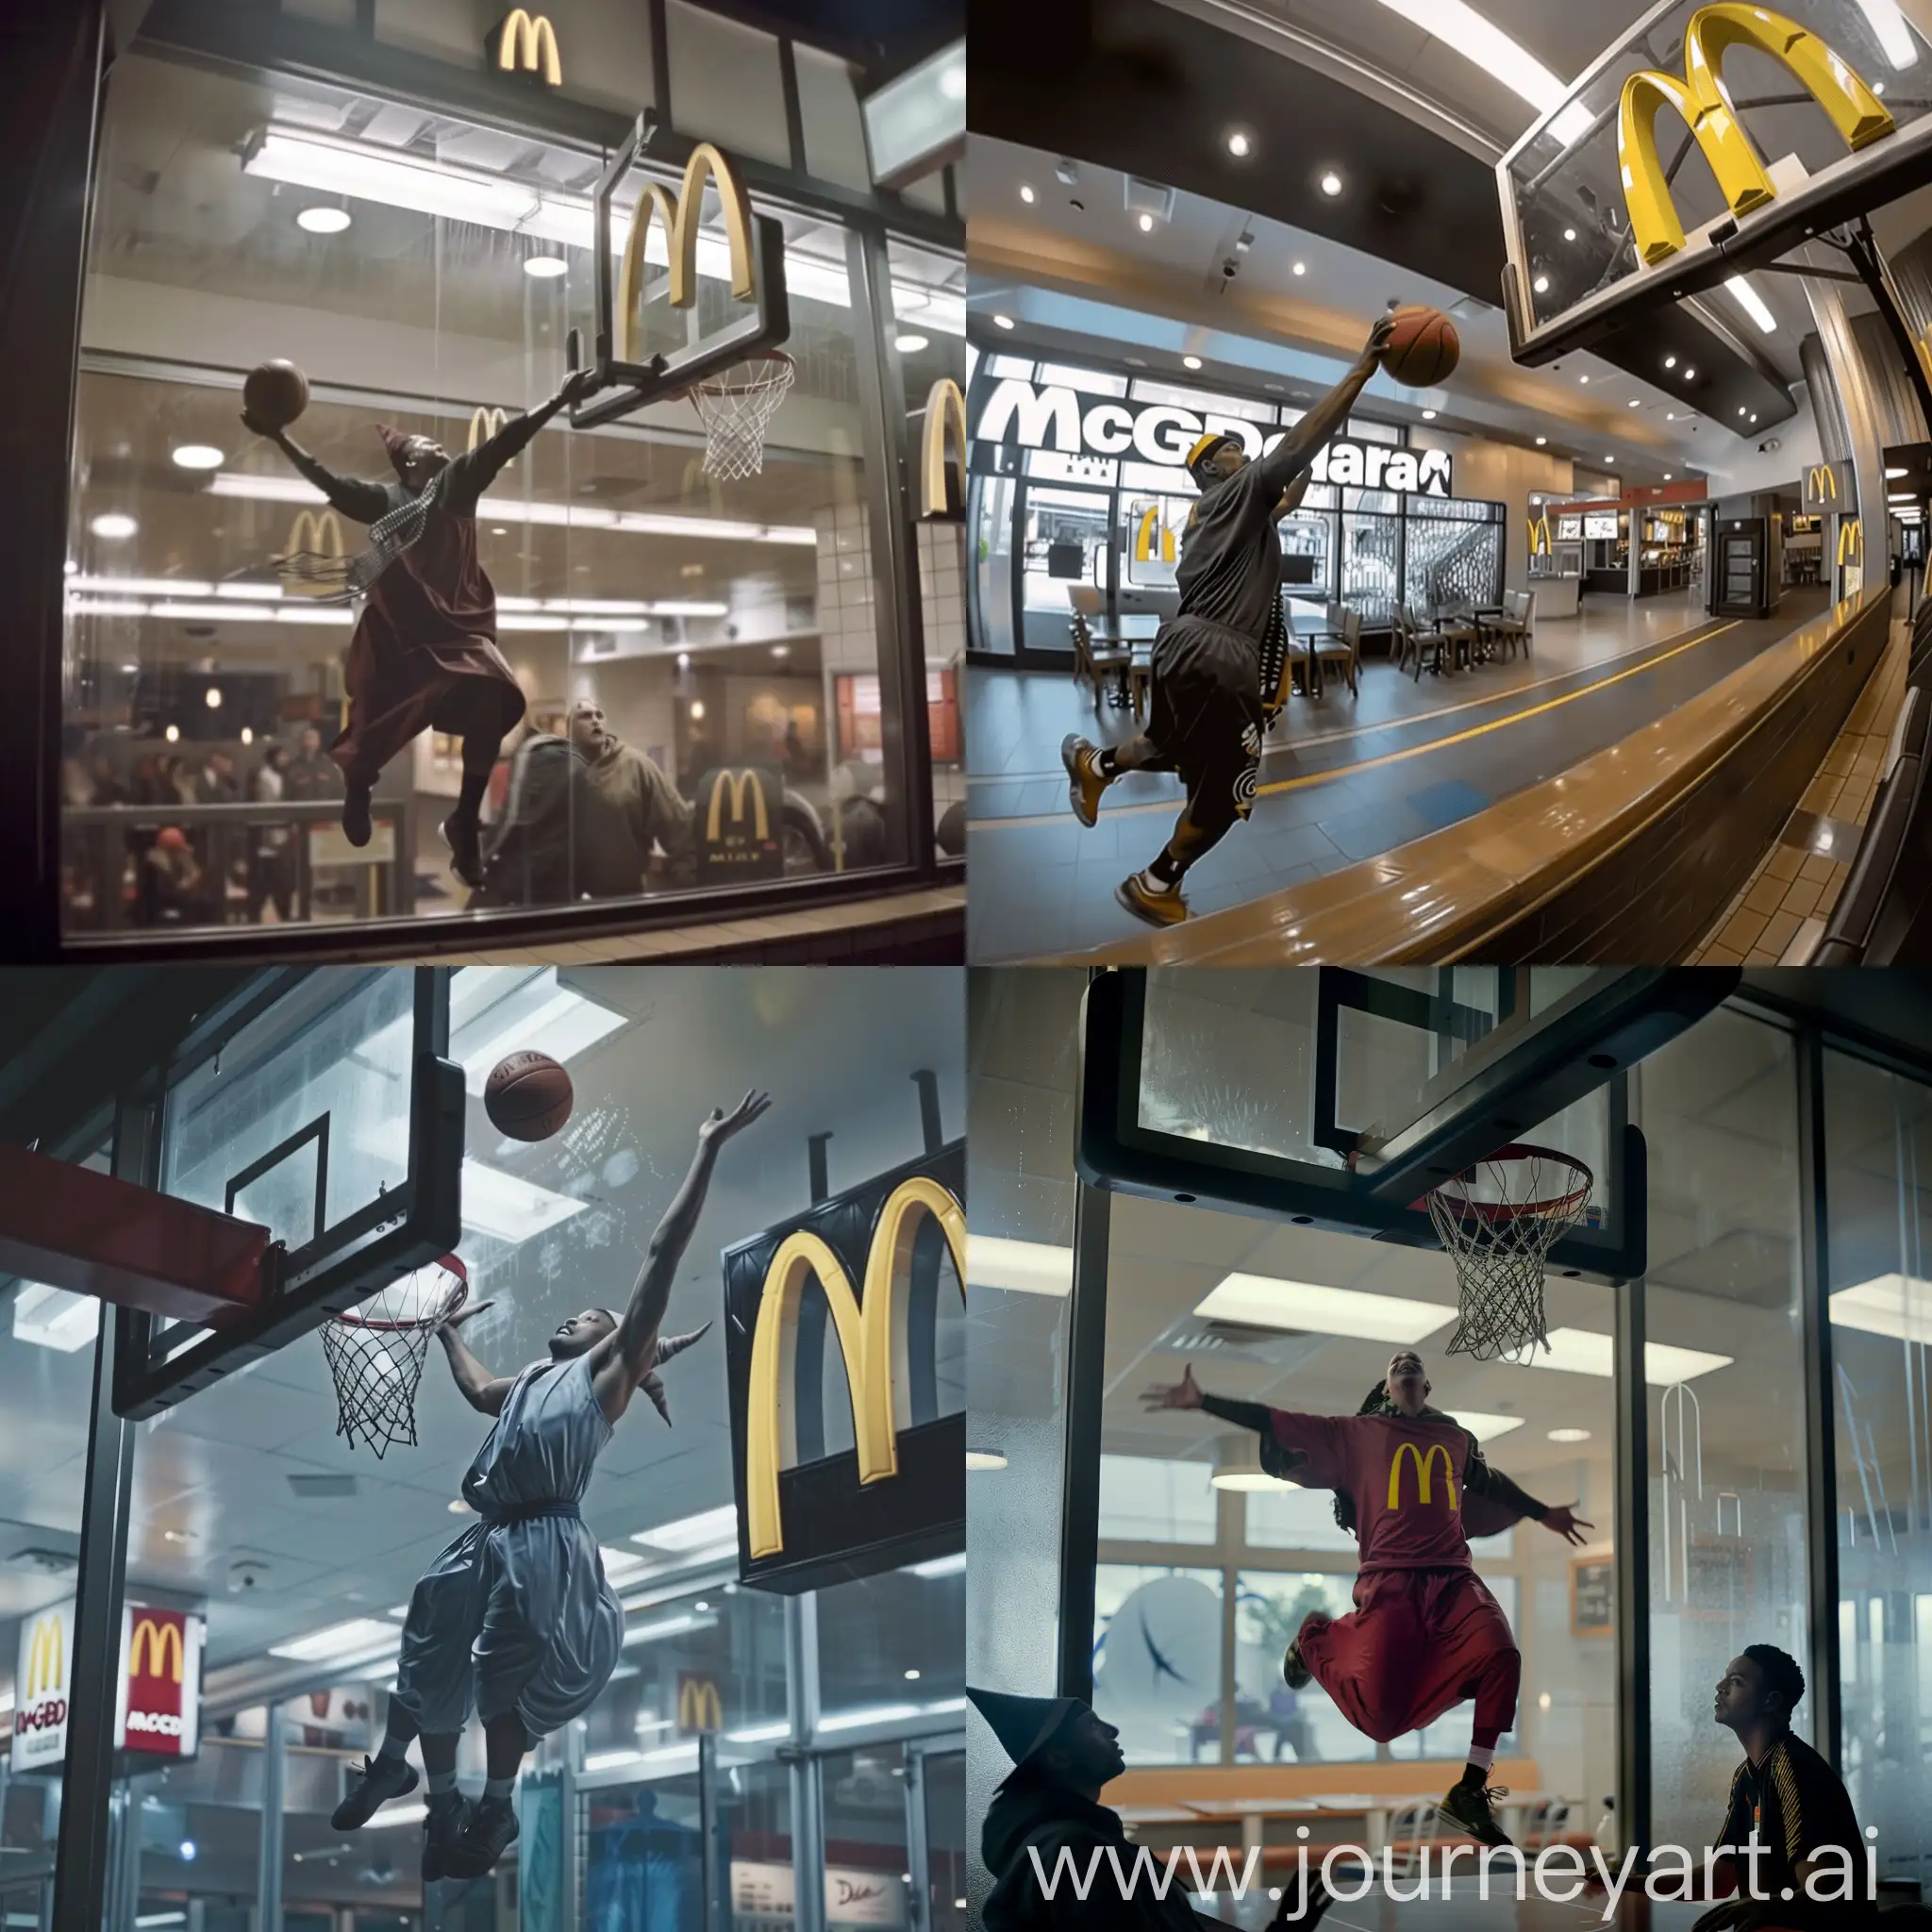 a wizard playing basketball inside mcdonals restaurant cctv footage